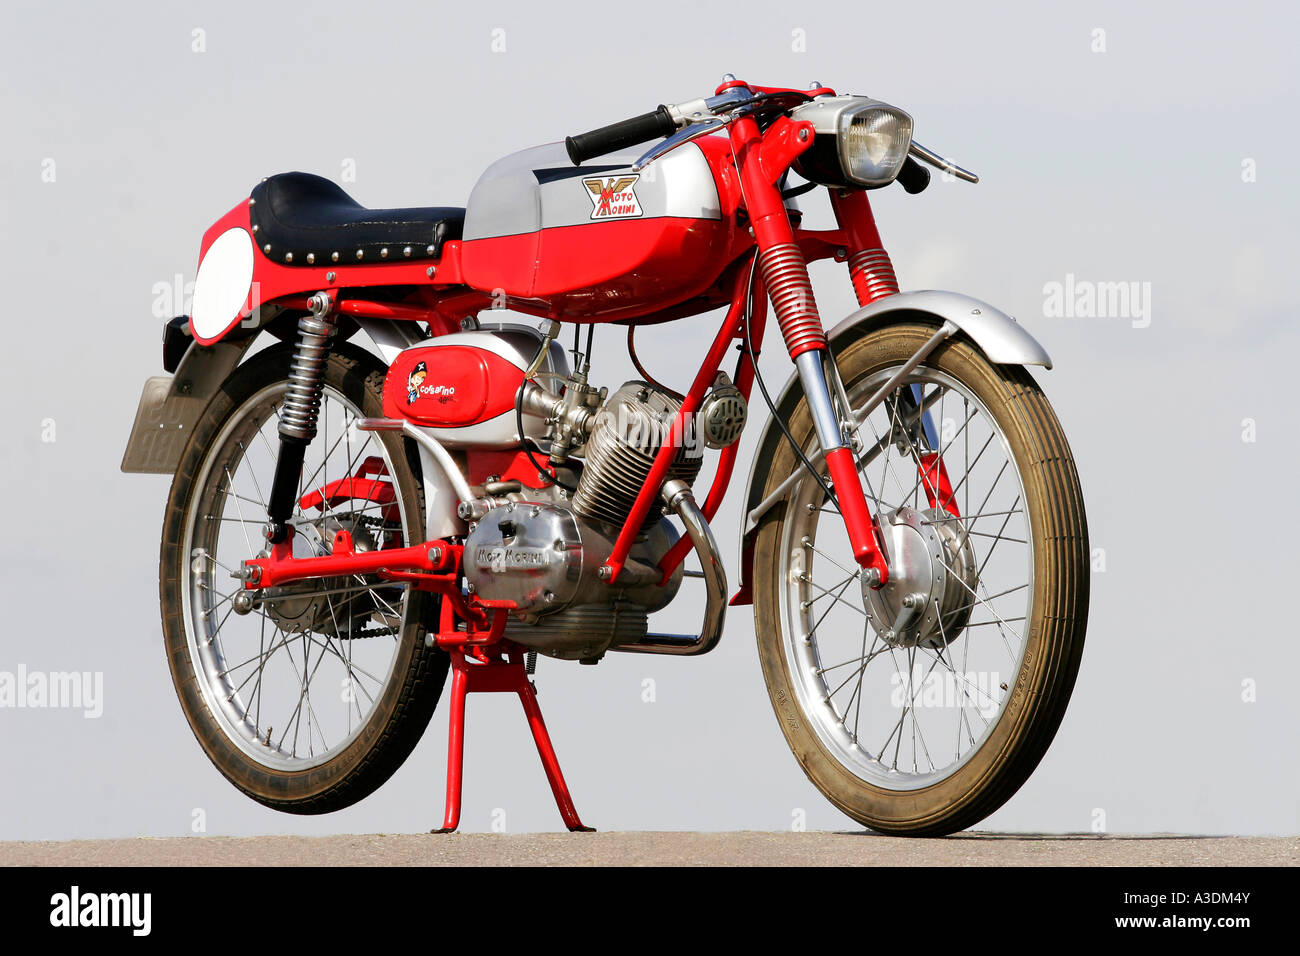 Moto Morini Corsarino - classic motorcycle Stock Photo